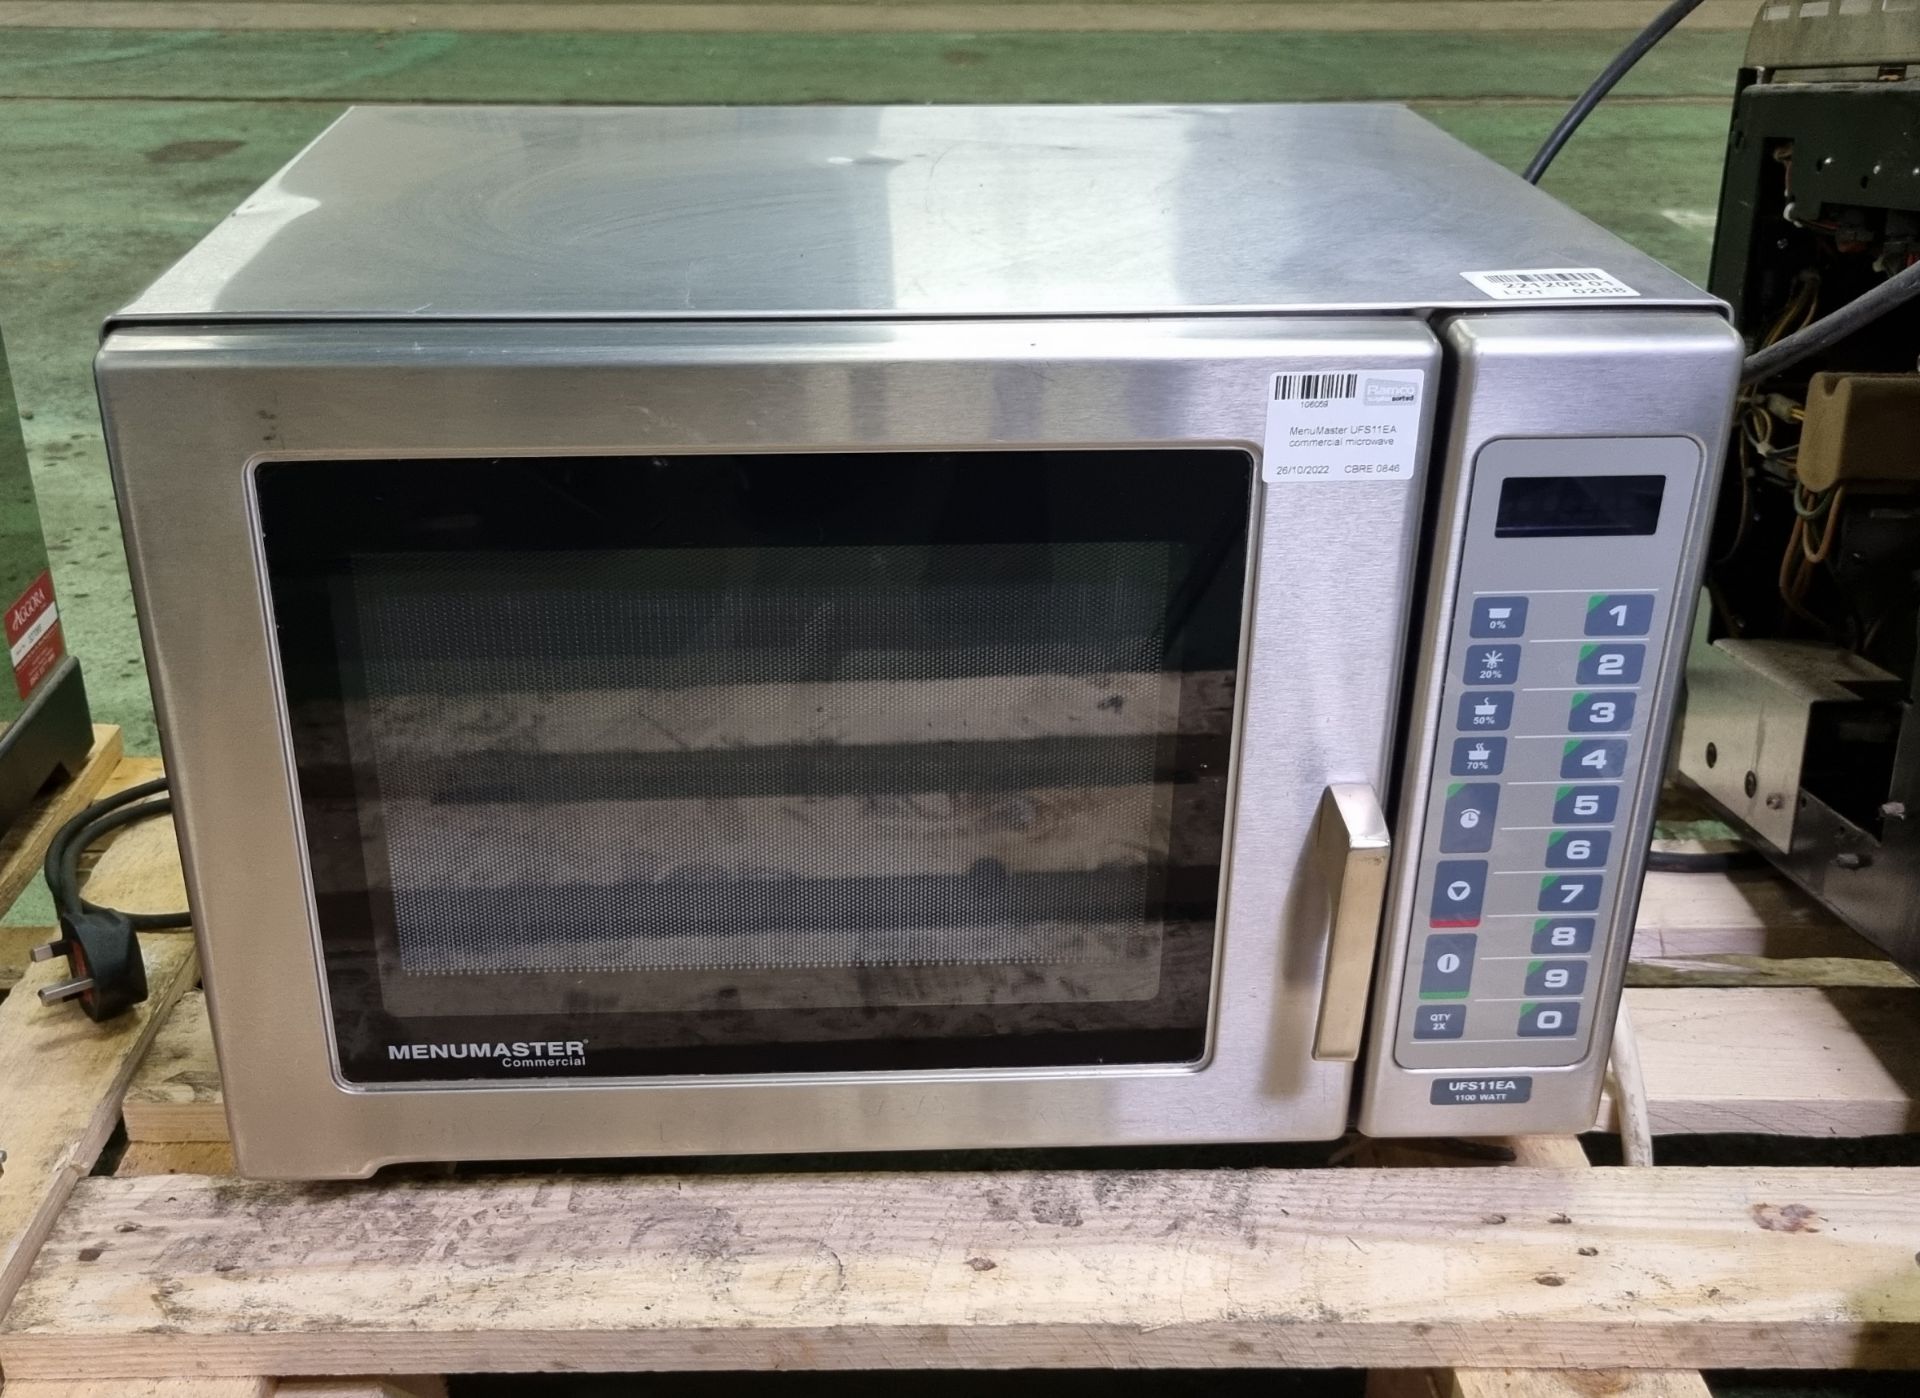 MenuMaster UFS11EA commercial microwave